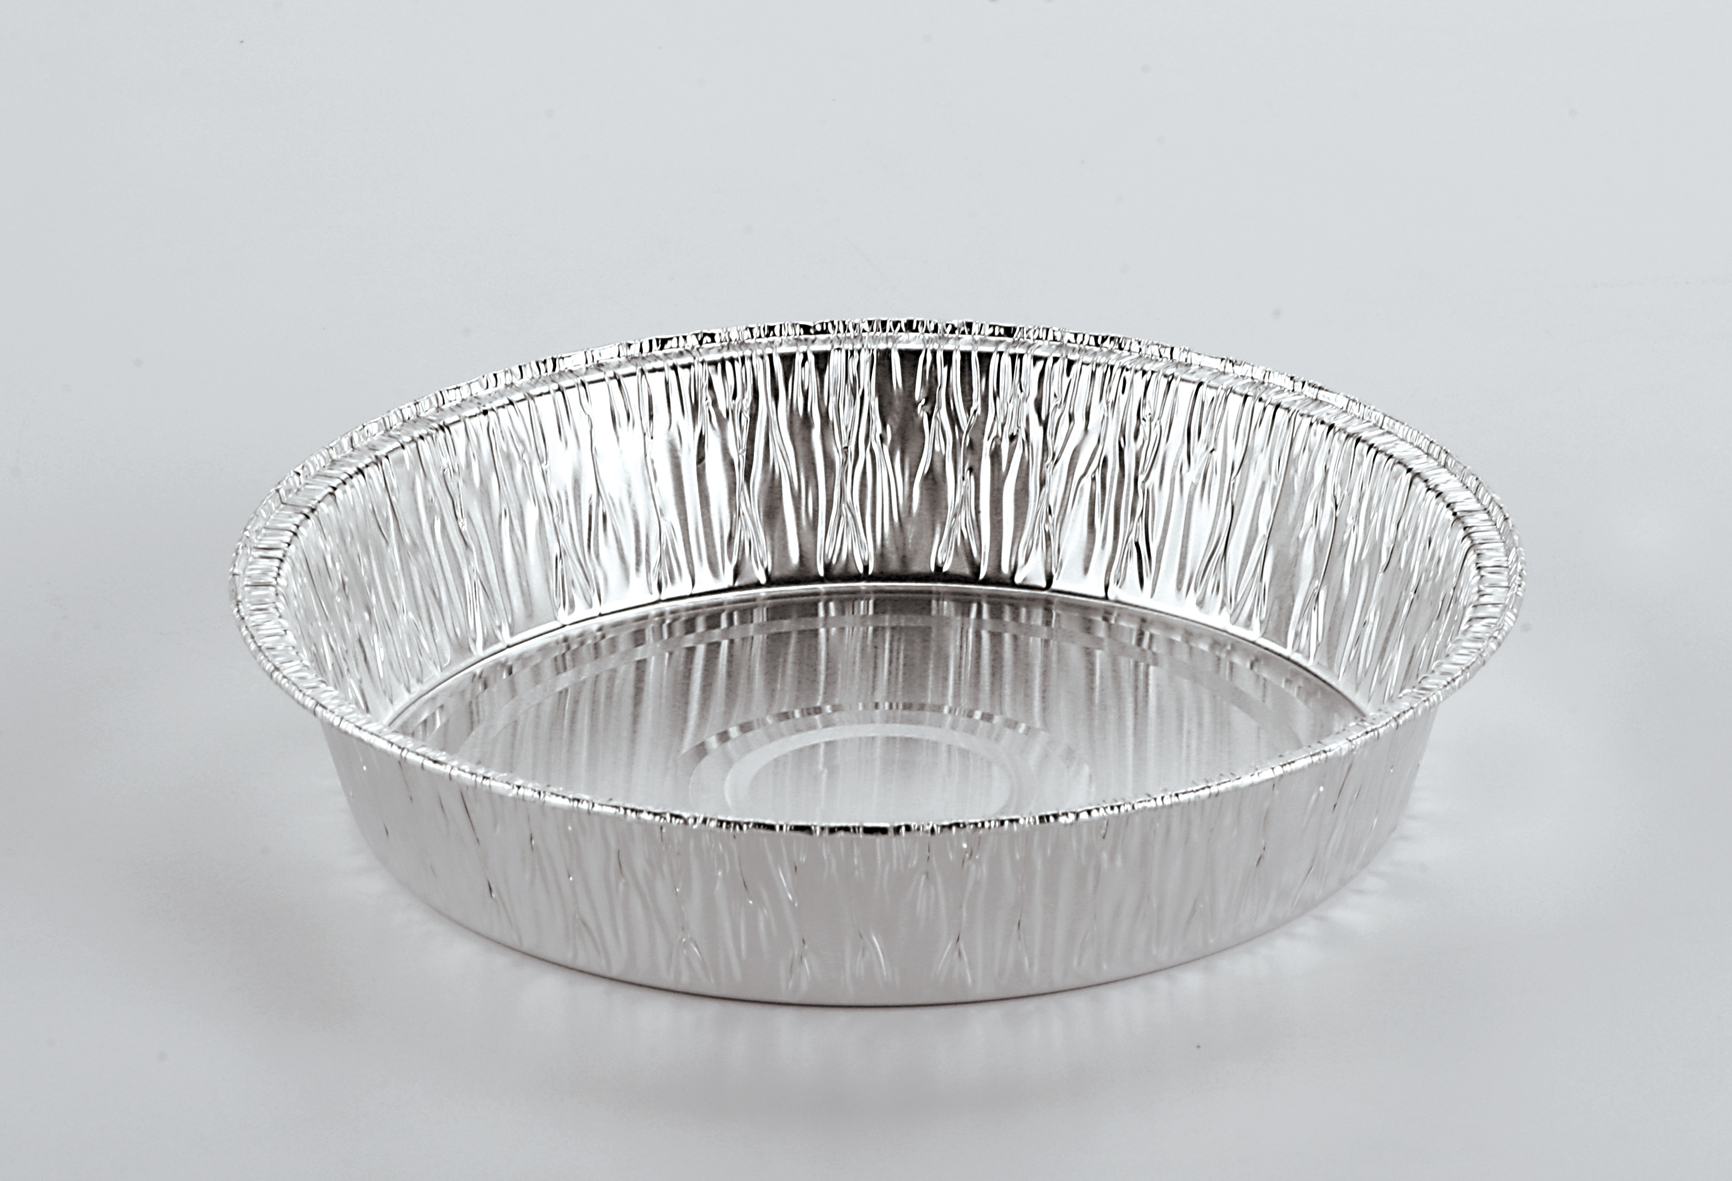 Vaschette in Alluminio rettangolari 292×191 mm. – Rosati Carta